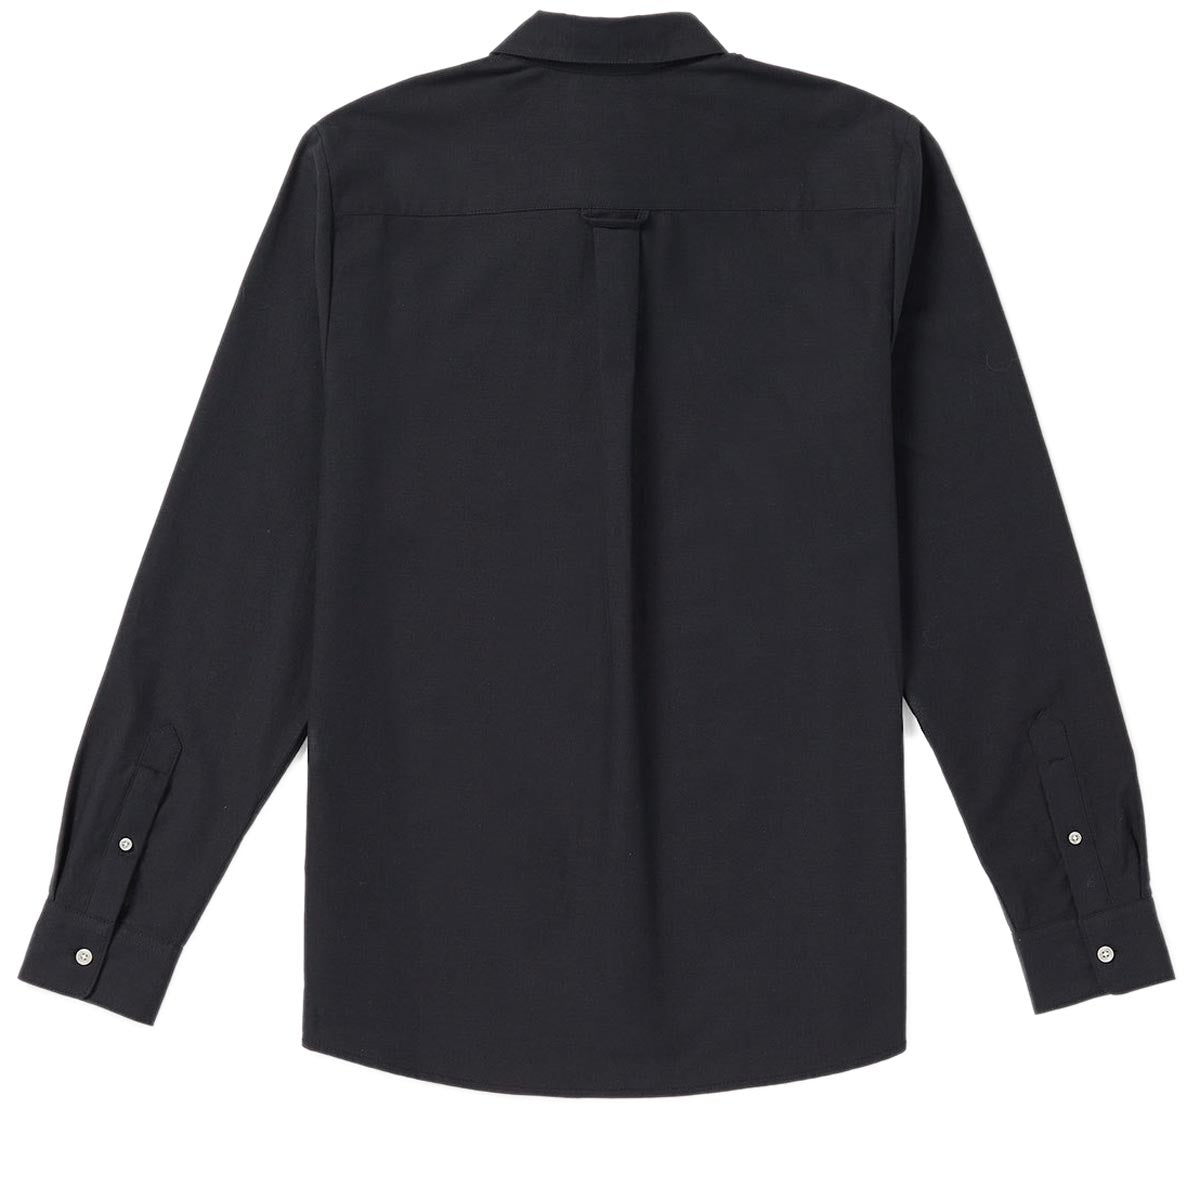 Volcom Veeco Oxford Long Sleeve Shirt - Black image 2